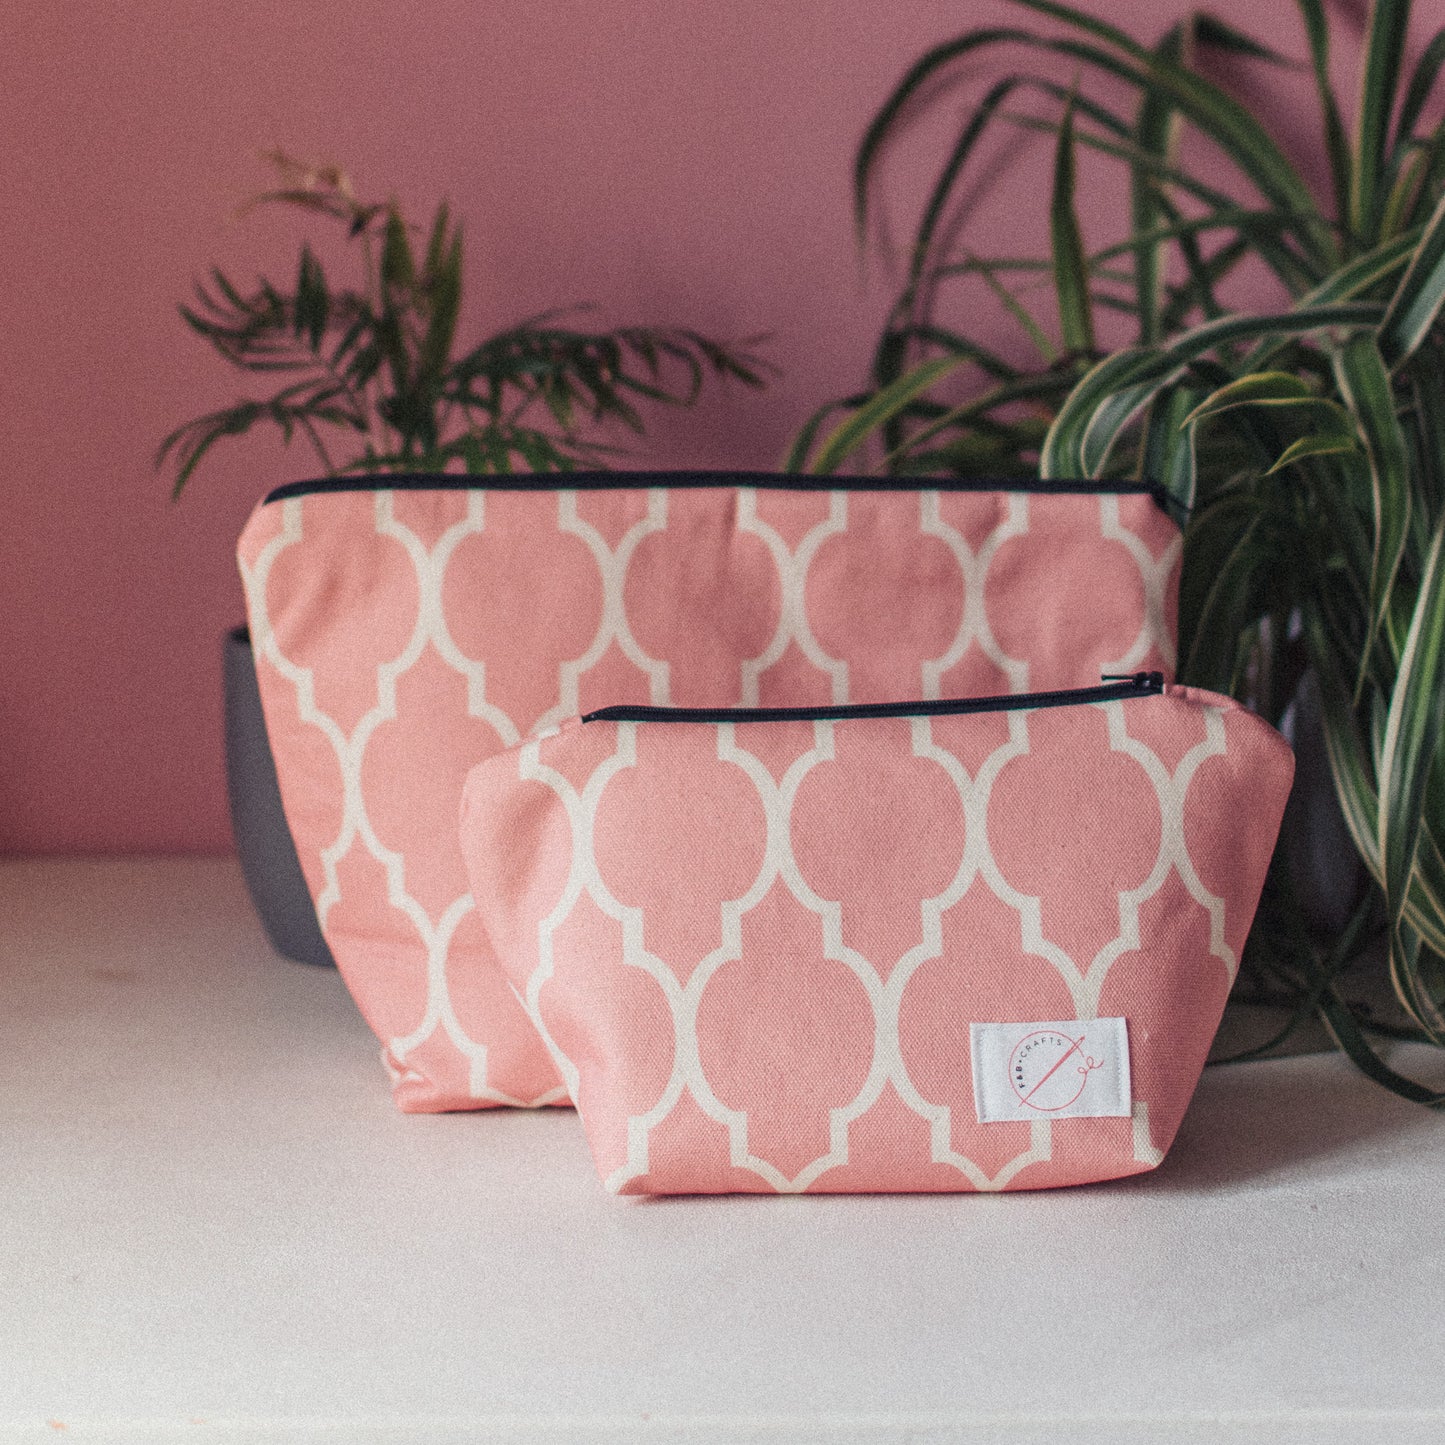 F&B Crafts Pink Trellis Wash Bag and Make Up Bag Handmade in Yorkshire - Gift Ideas Vintage Inspired